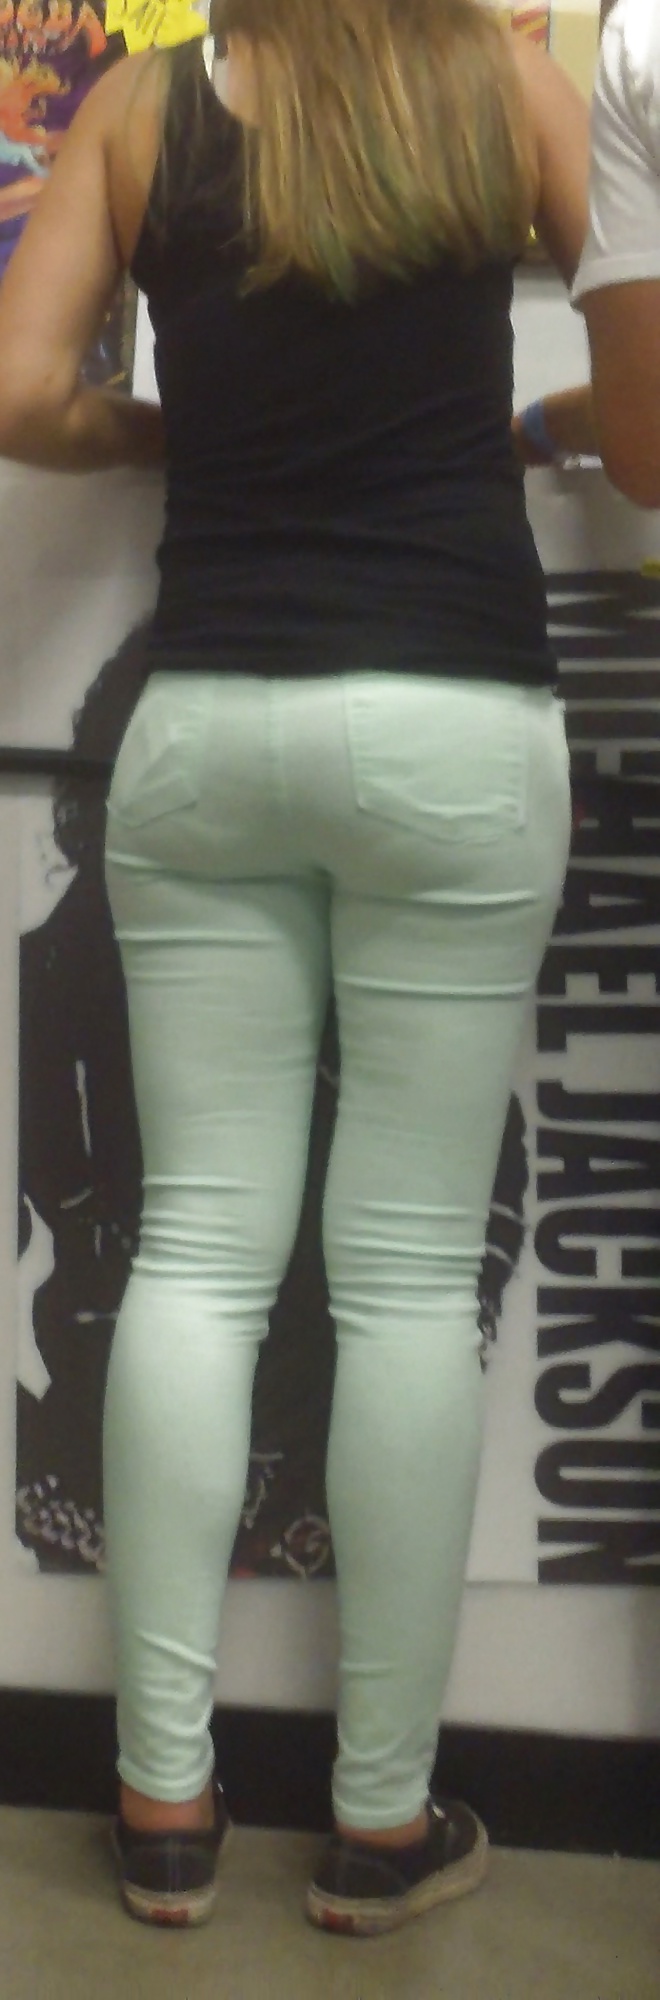 Big juicy teen ass & butt in jeans #32681948